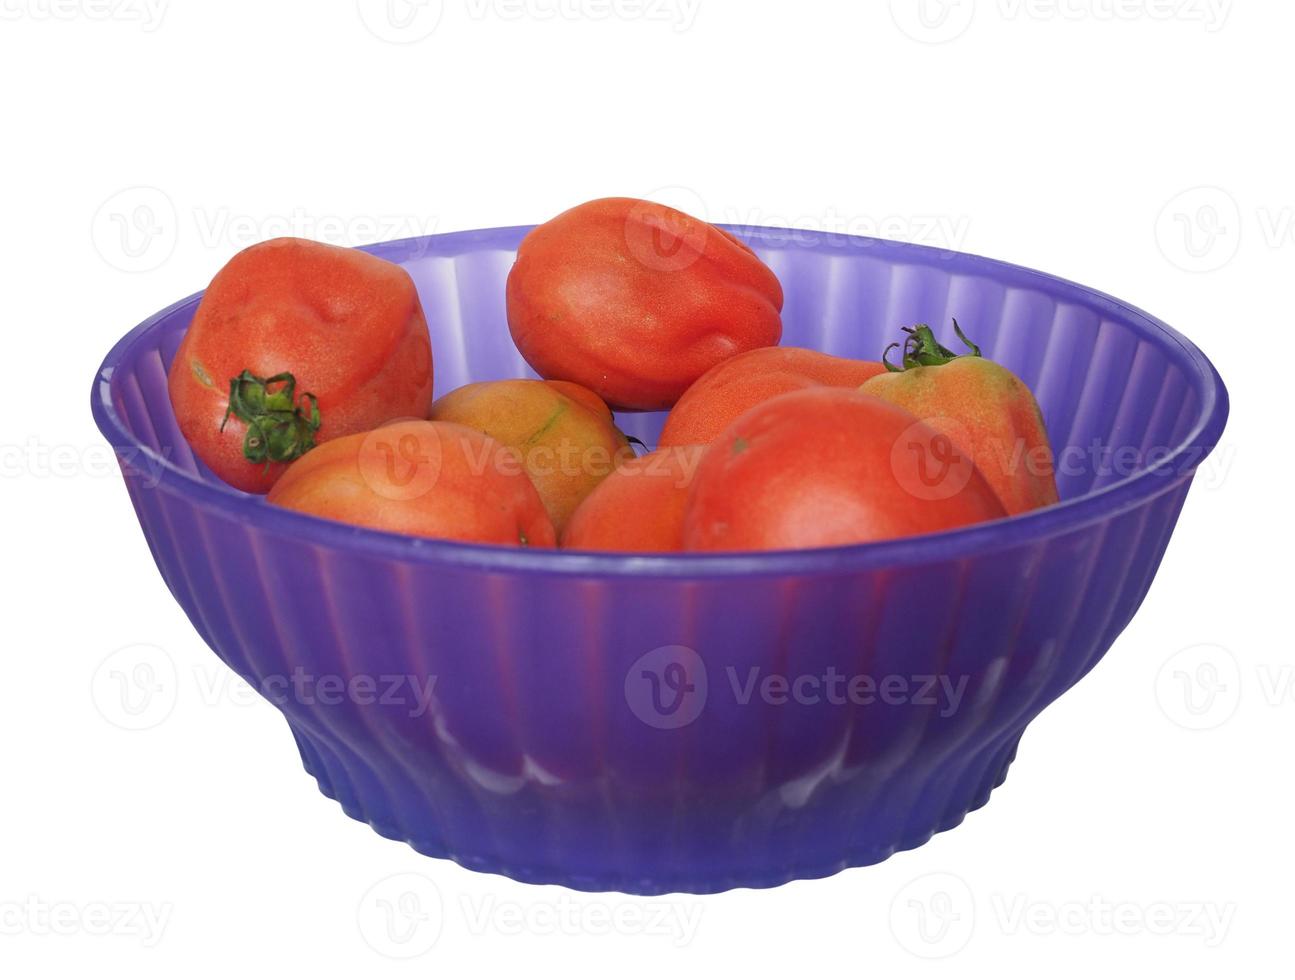 tomates en un tazón morado foto